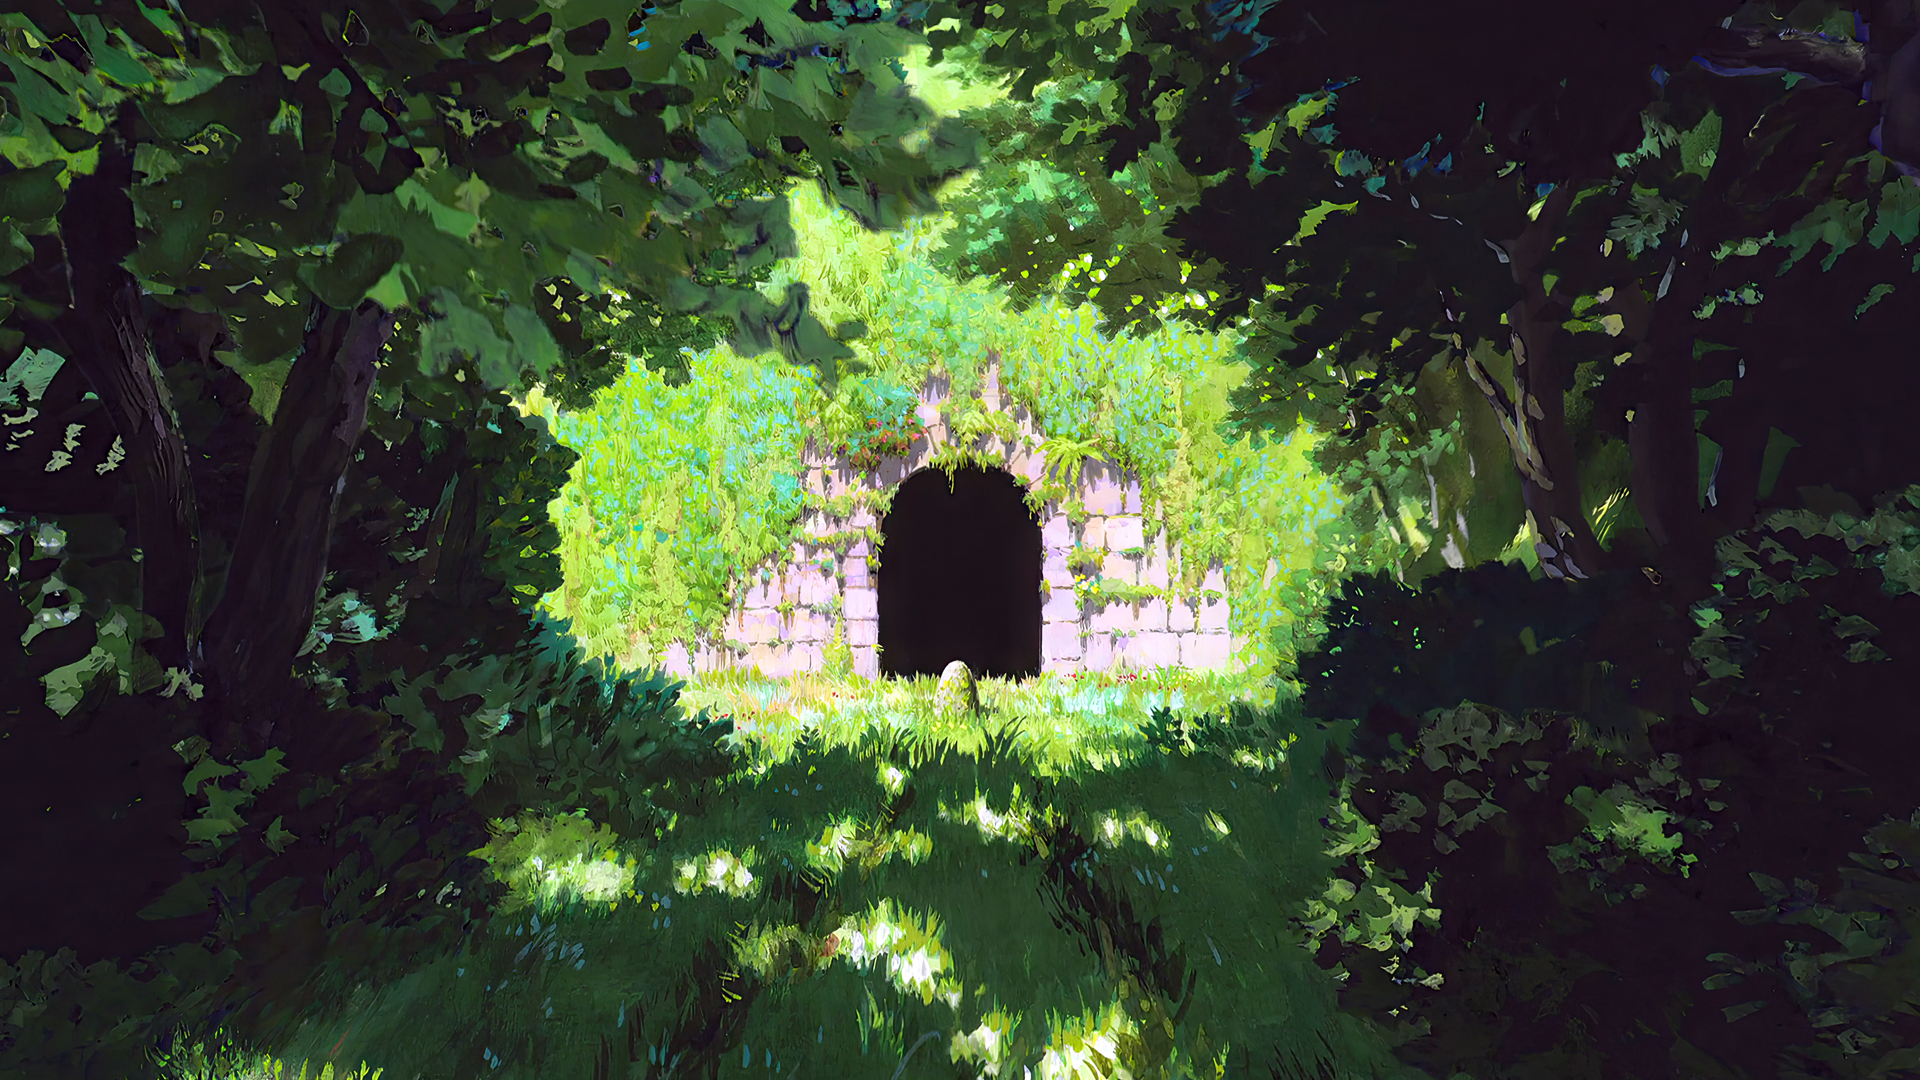 Anime 1920x1080 Spirited Away animated movies anime animation film stills Studio Ghibli Hayao Miyazaki tunnel trees forest path grass